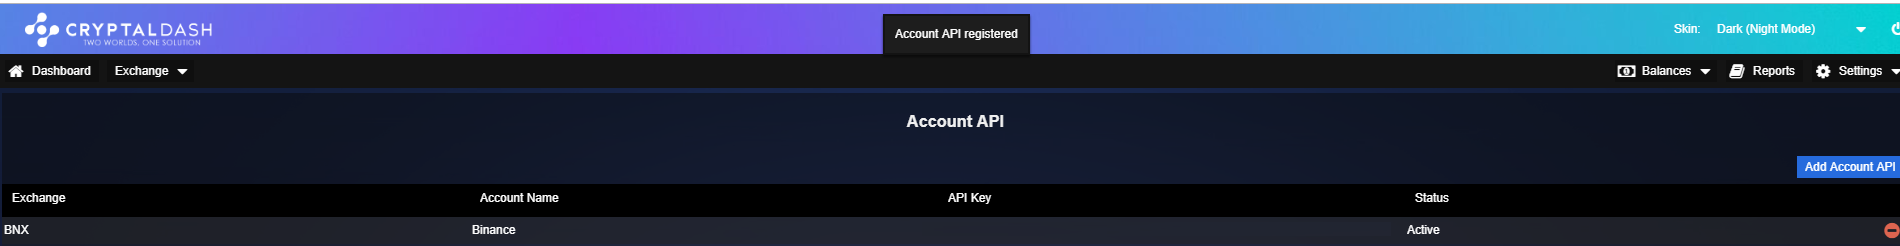 account_api_registration.png